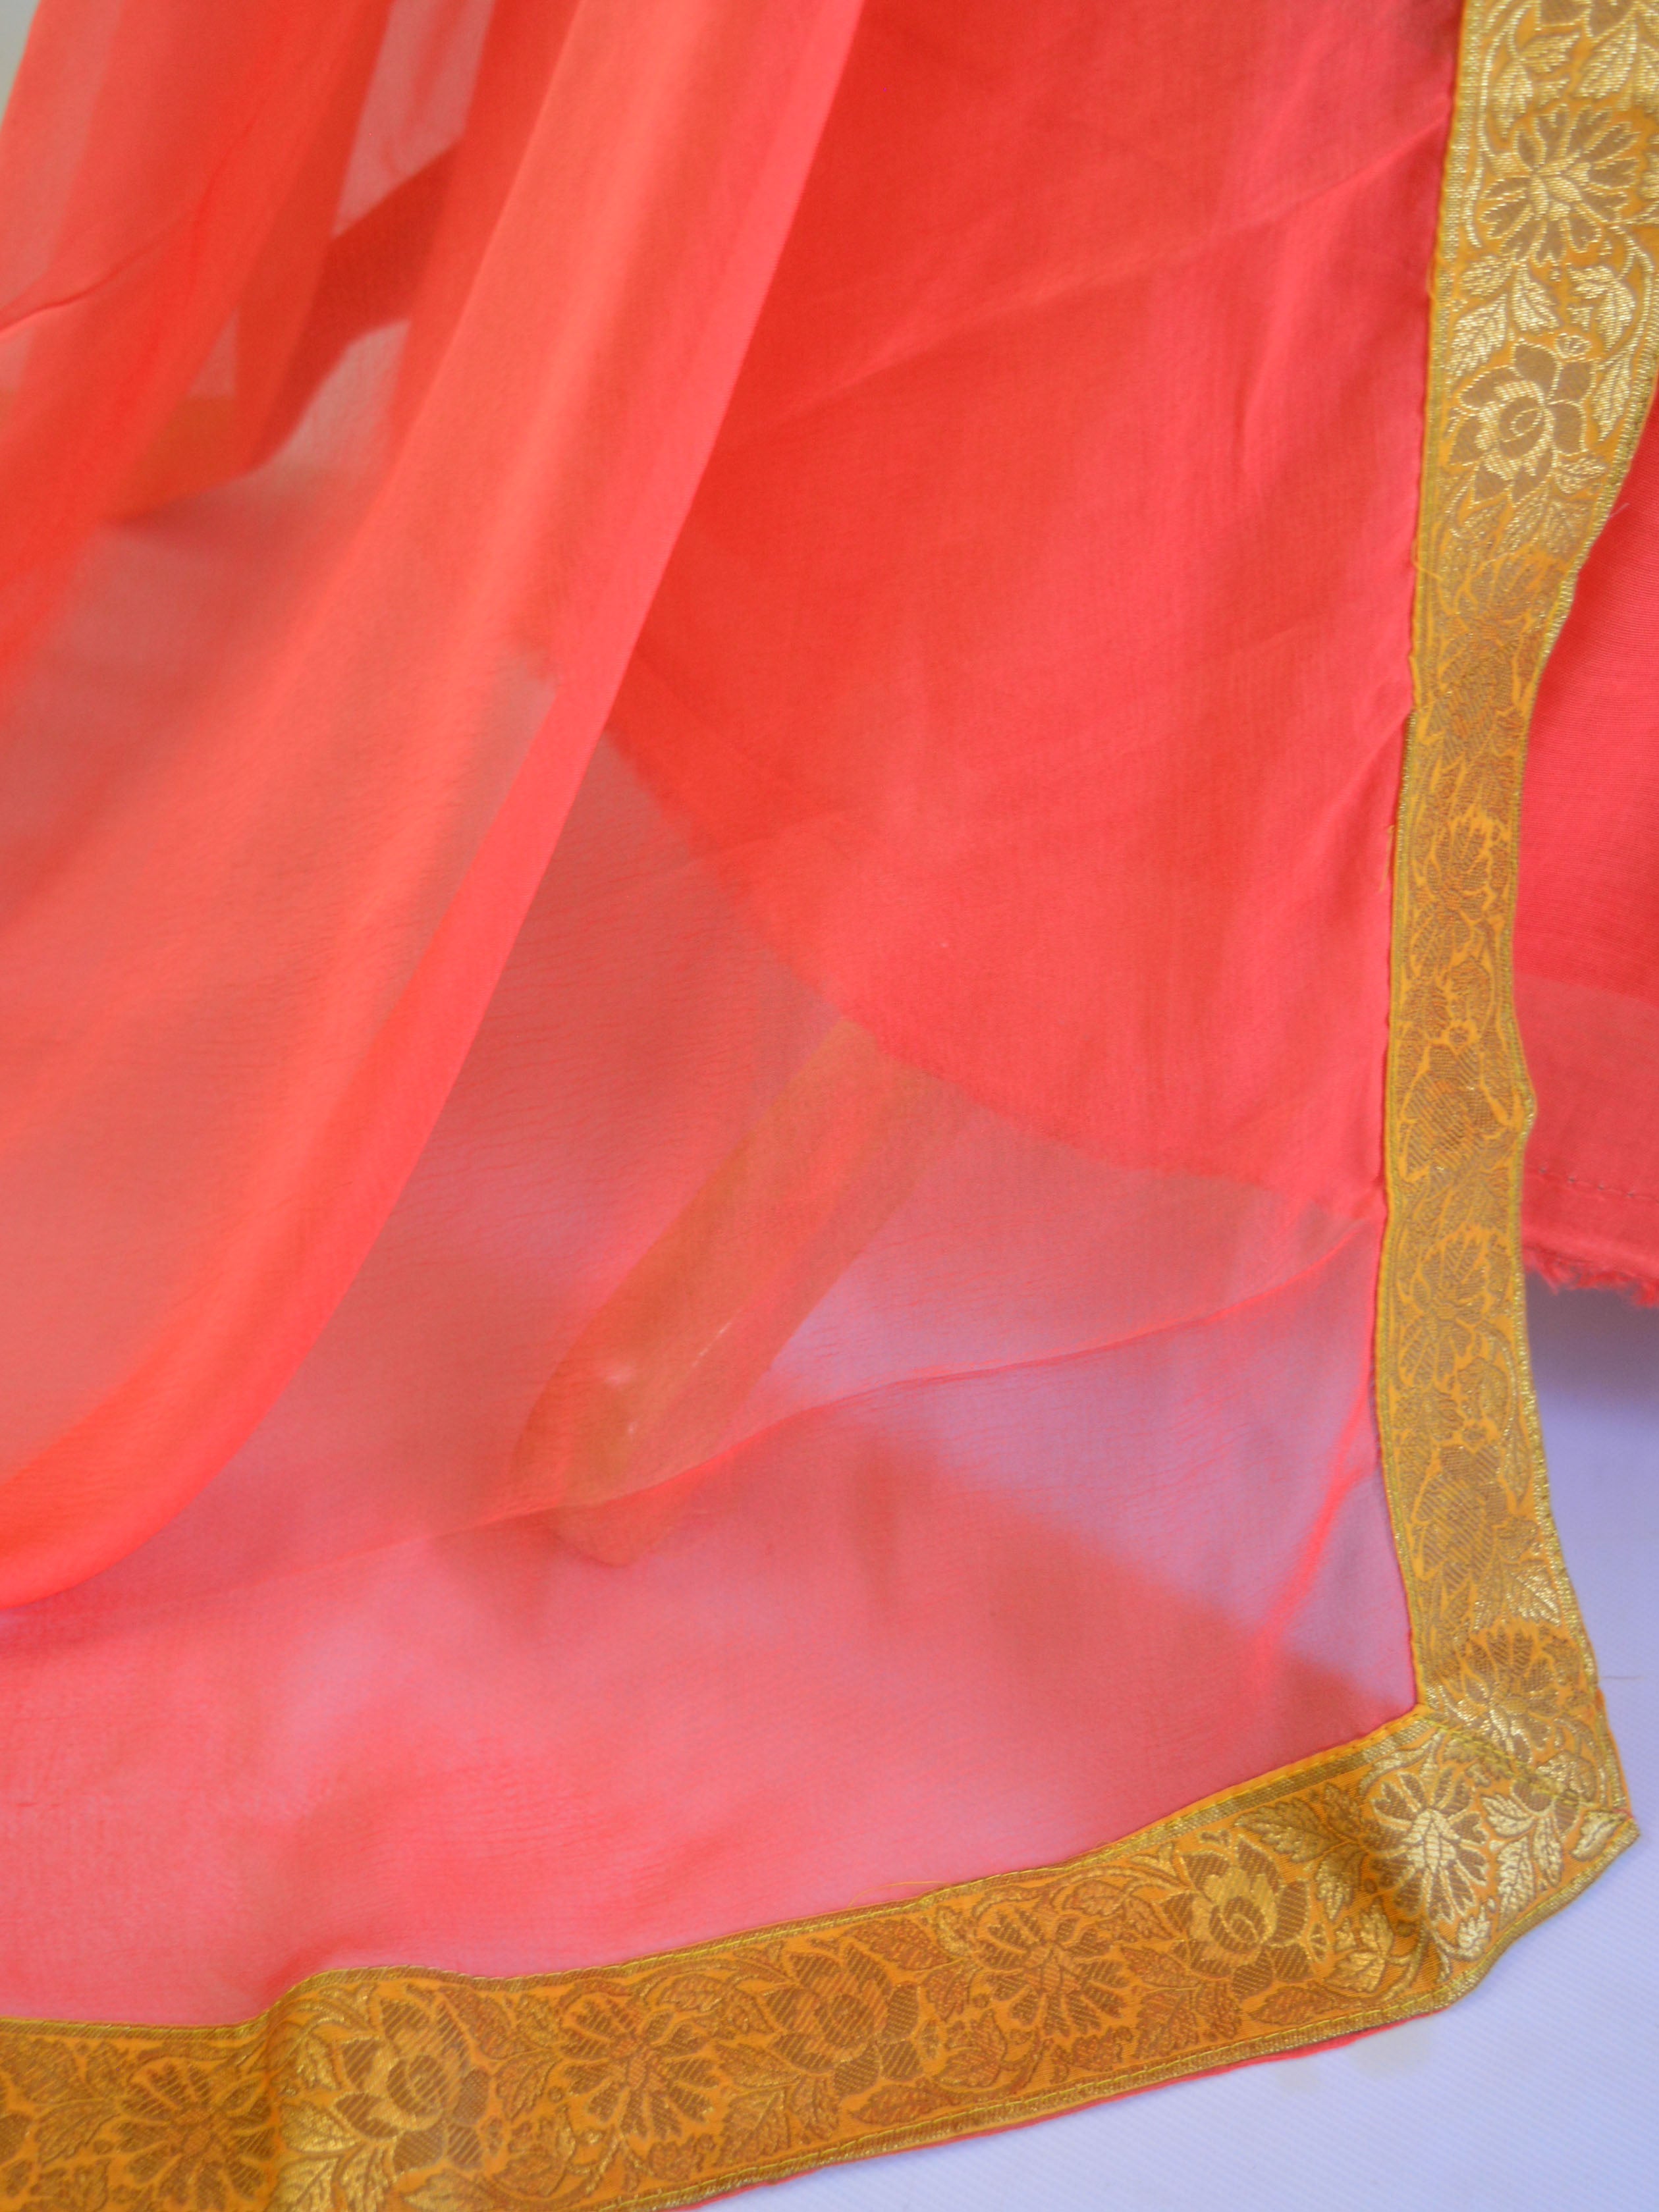 Banarasee Salwar Kameez Cotton Silk Woven Antique Gold Buti Fabric With Peach Dupatta-Yellow